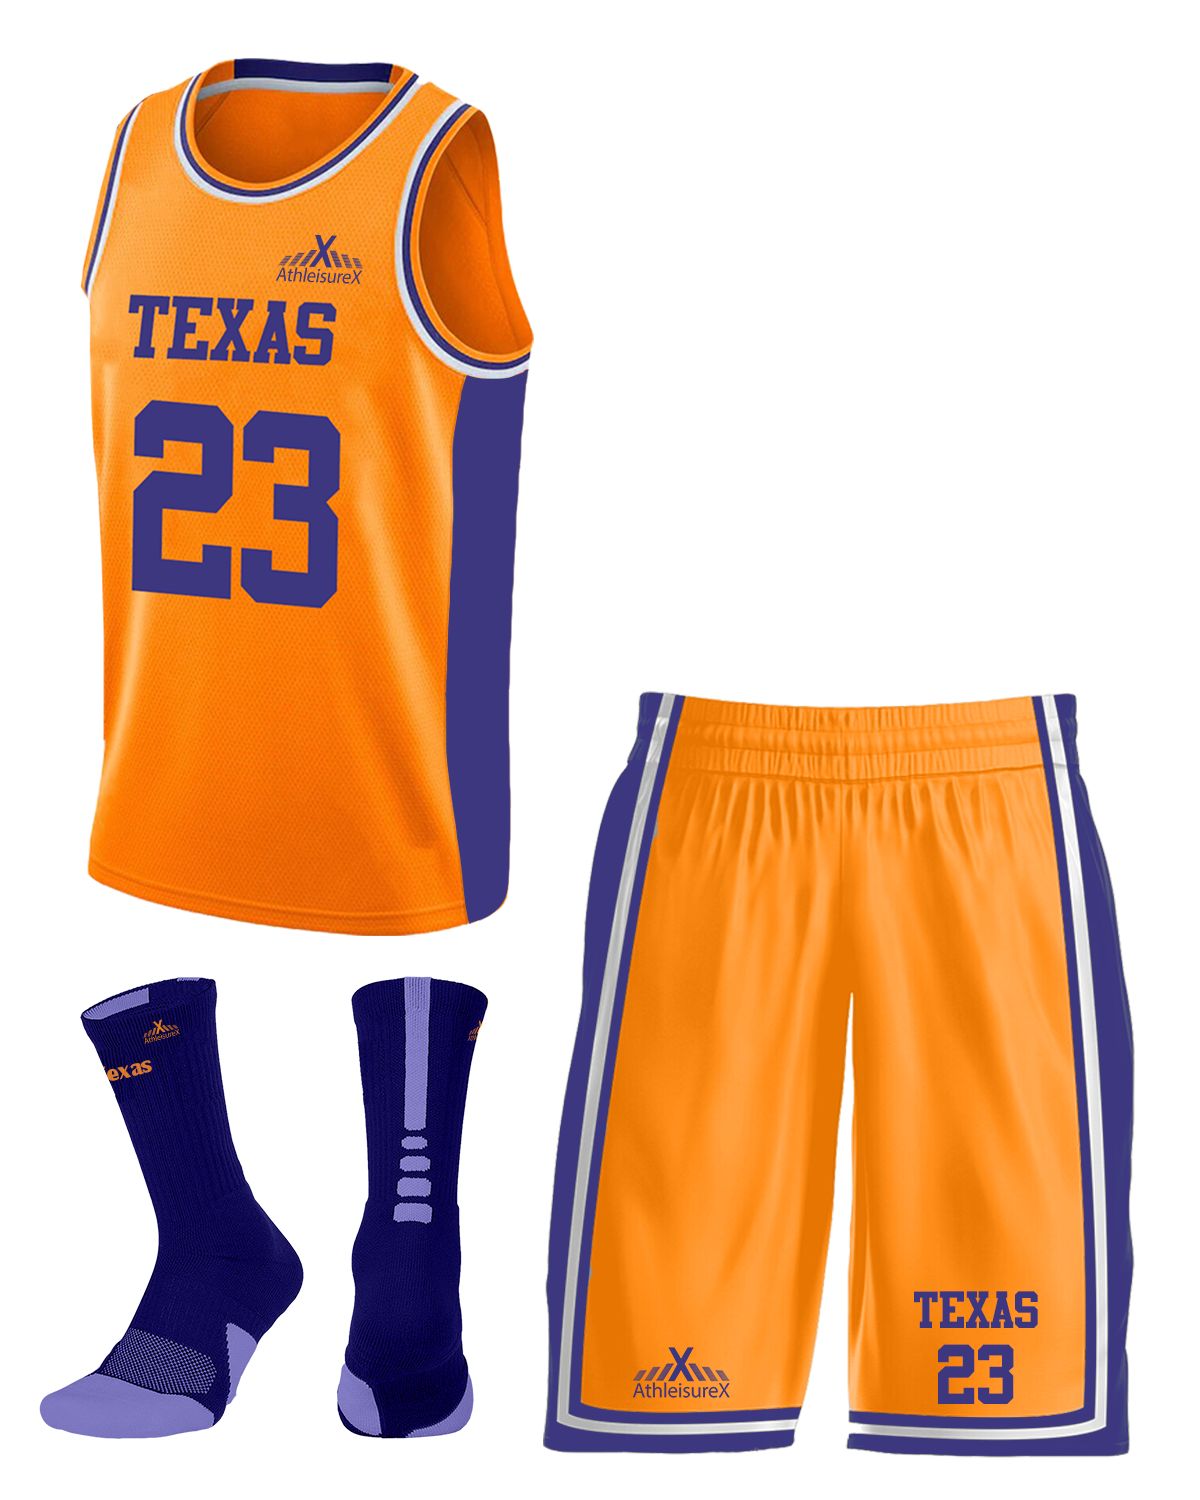 AthleisureX Full Custom Basketball Uniform (Jersey + shorts) - for Women